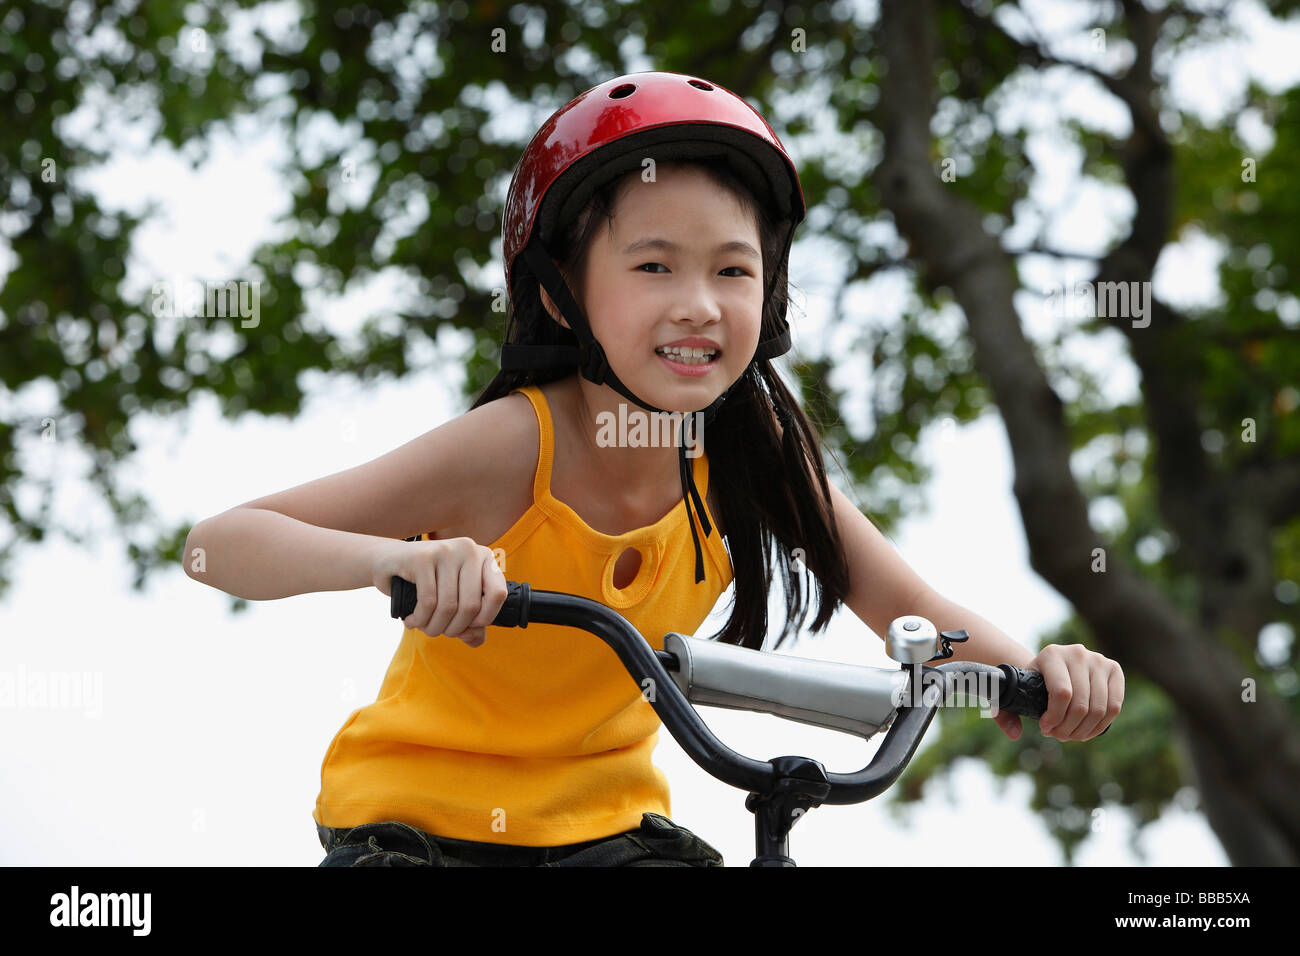 Young girl riding bike Stock Photo